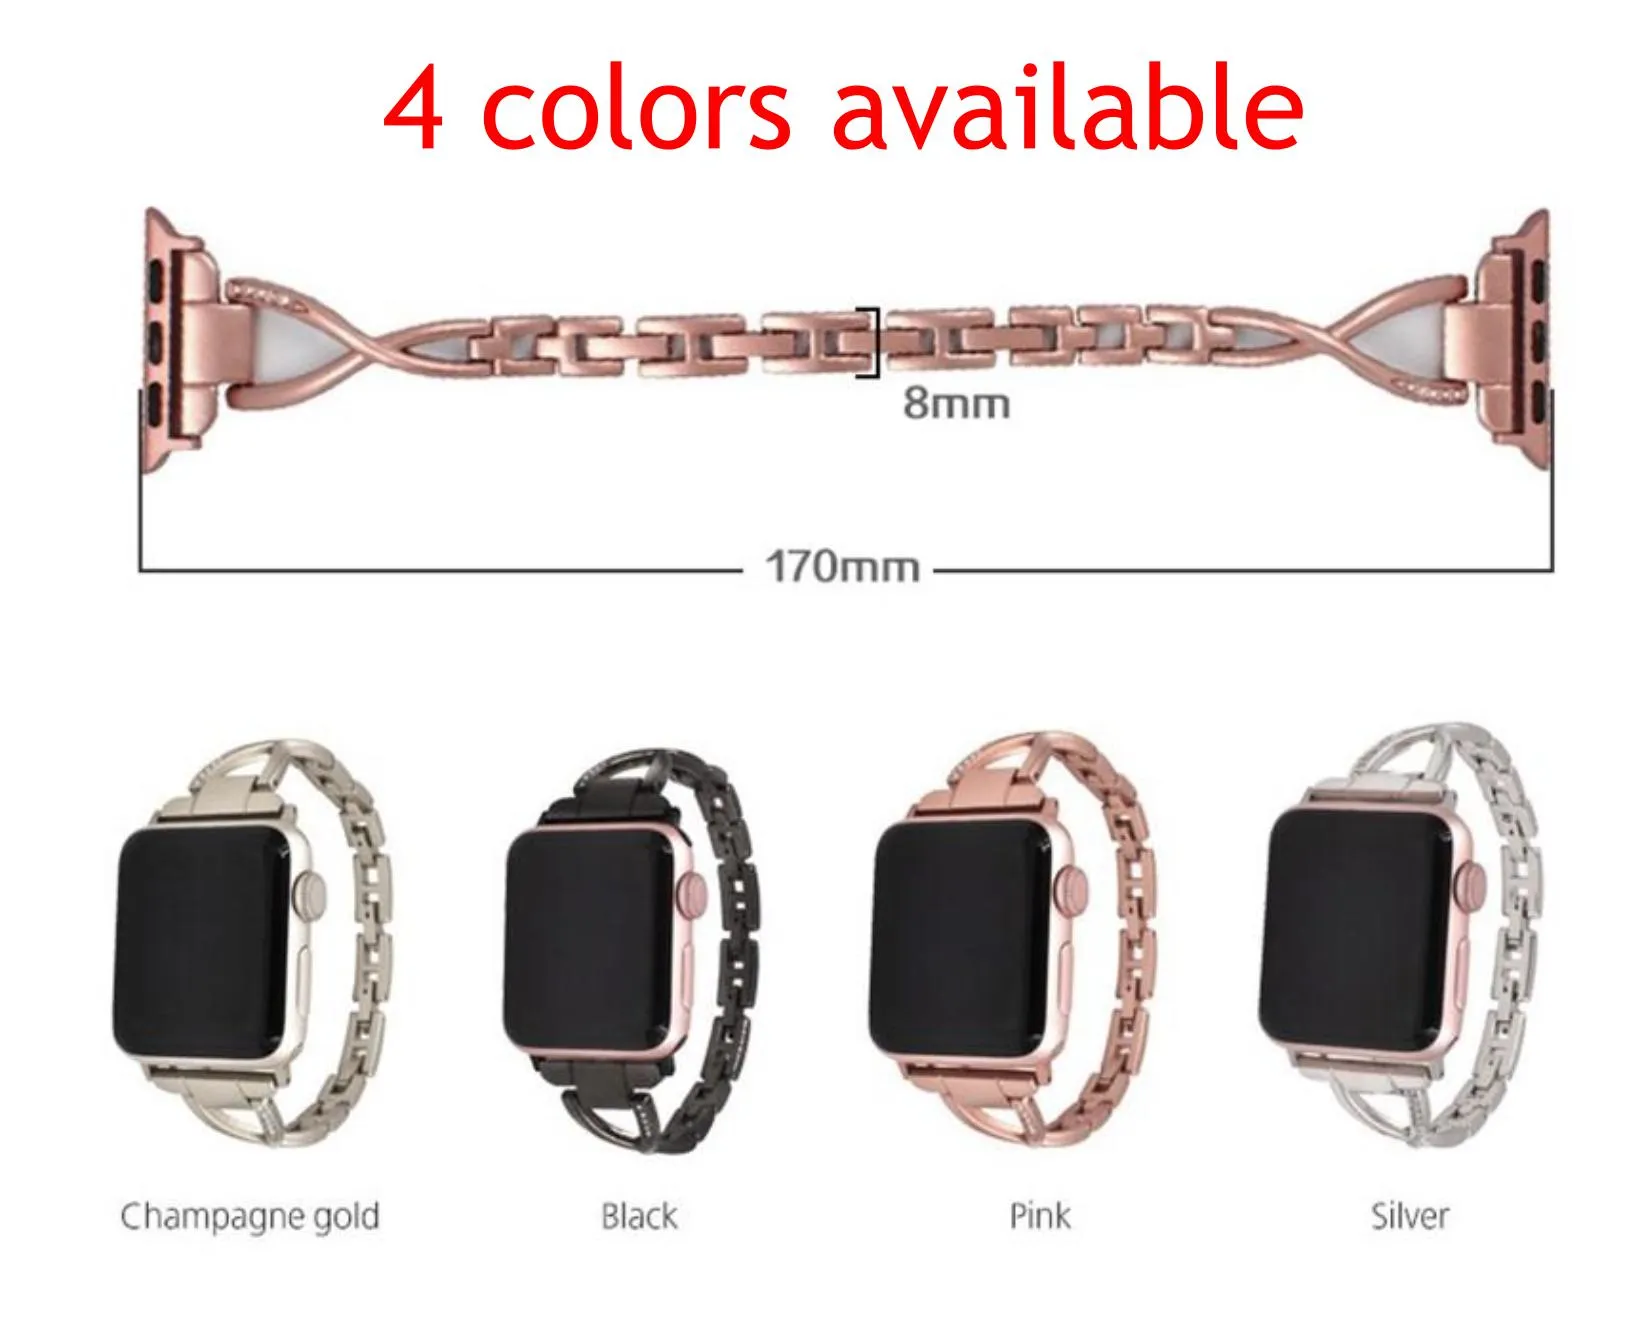 Vrouwen Sieraden Horlogeband voor Iwatch Apple Watch 38mm 42mm Serie 3 2 1 Diamond Band Rvs Strap Armband